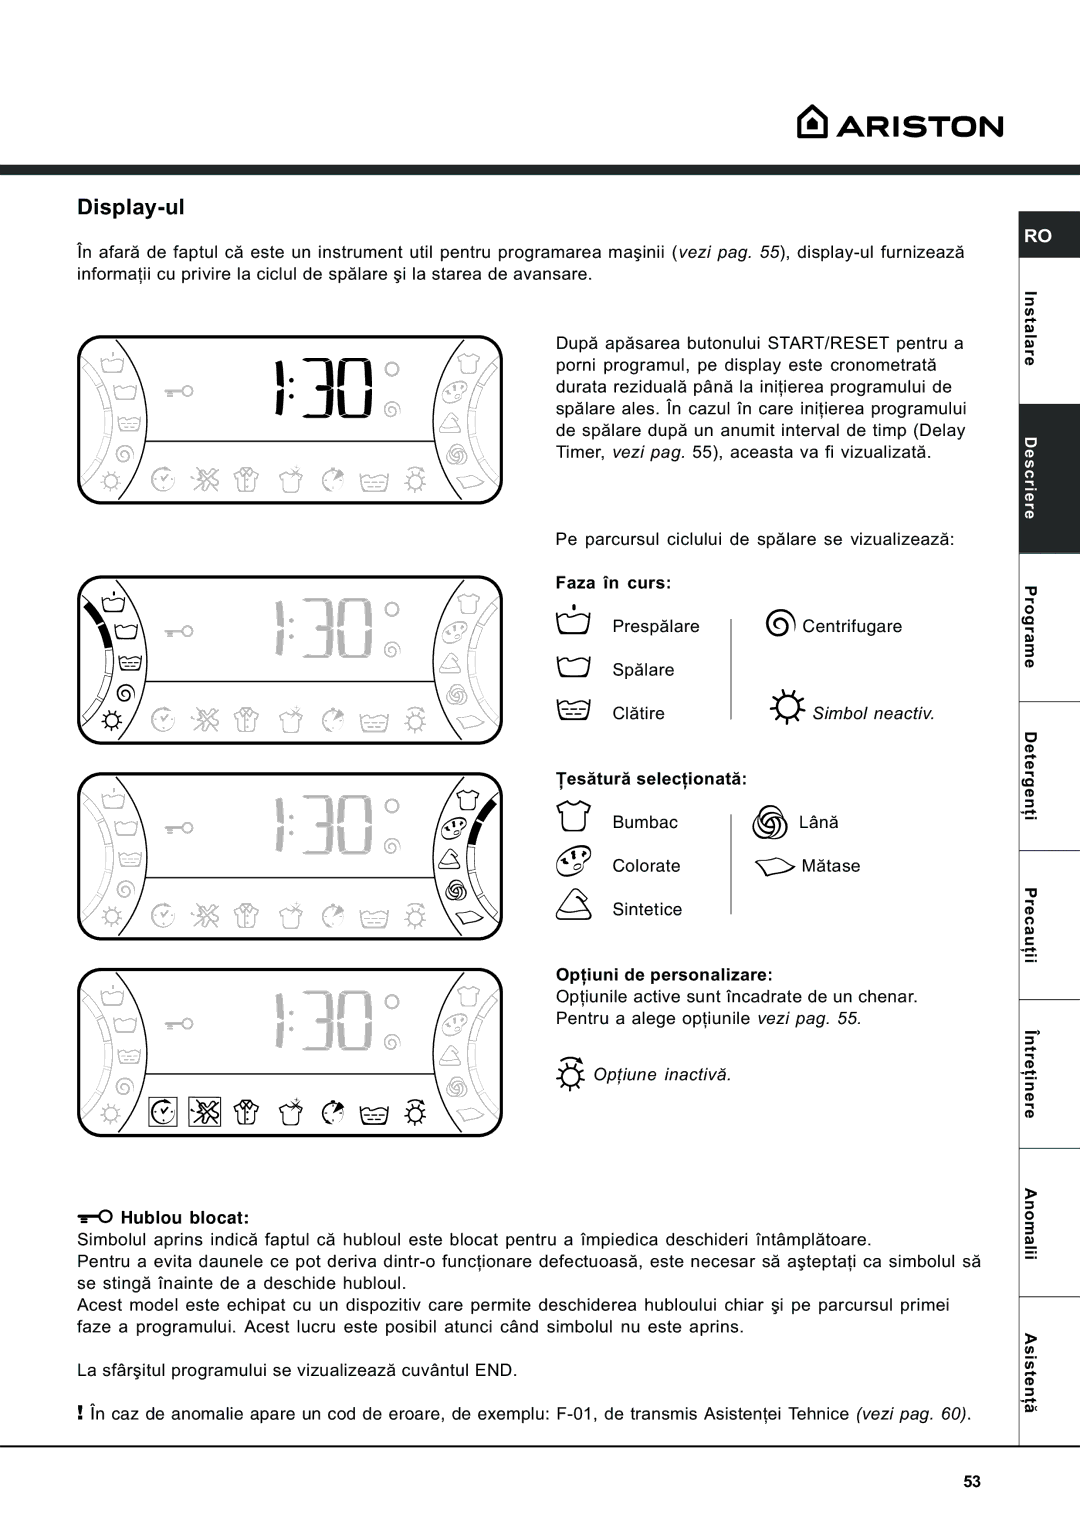 Ariston AVSD 109 manual Display-ul, Instalare Descriere, Programe, Detergenþi Precauþii Întreþinere Anomalii Asistenþã 